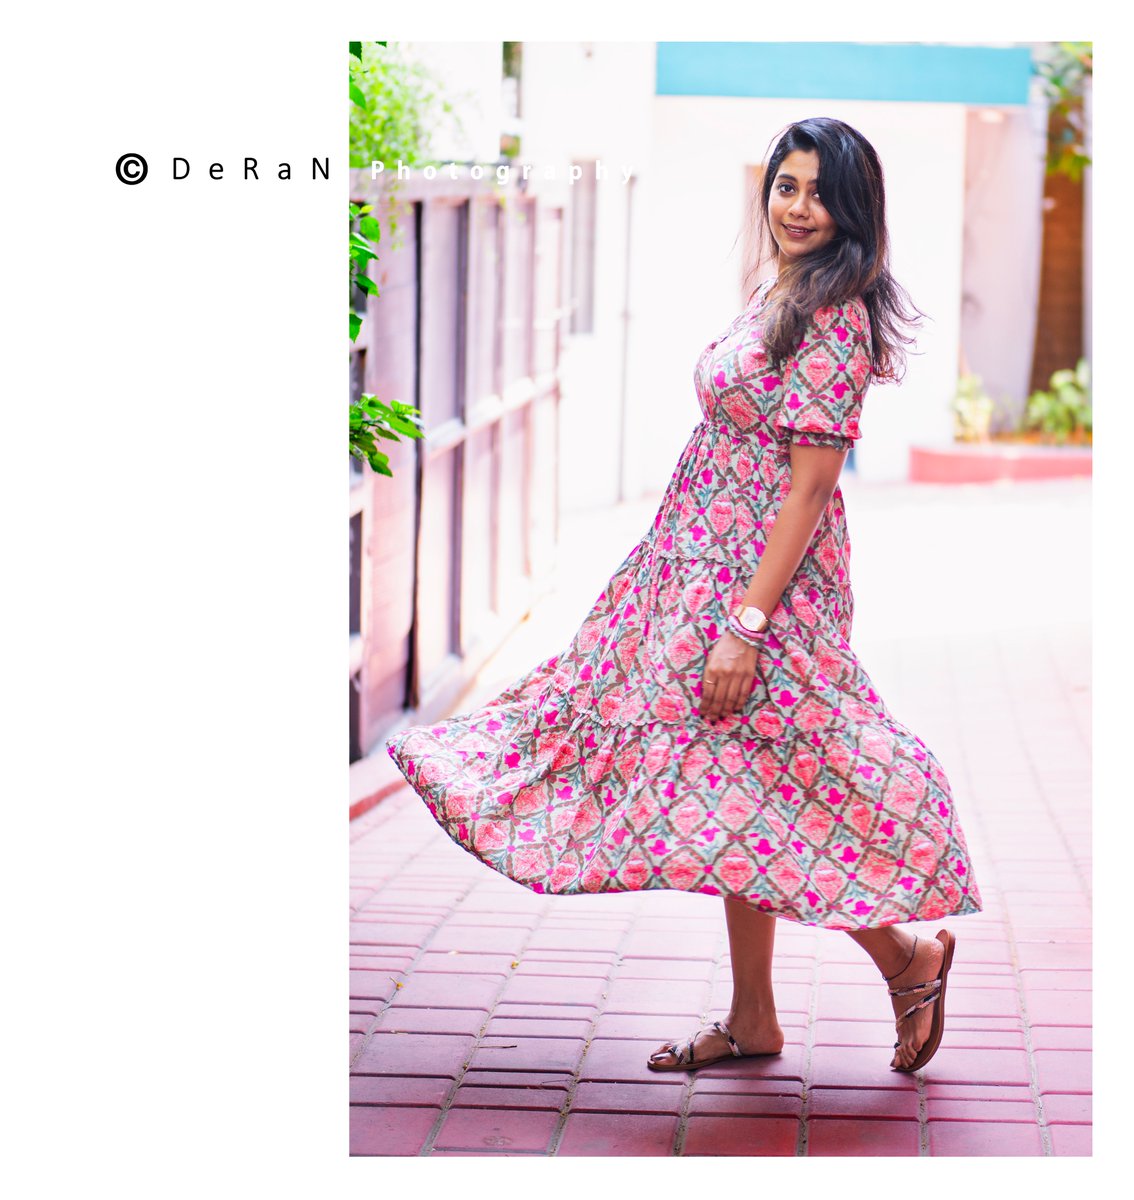 #Dharanireddy #Findertamilmovie #tamilactress #fashionblogger #southindianactress #streetsmart #eyemakeup #glamshoot #sexyportrait #fashionportrait #portraitphotography #PanasonicLumix #lumixgh9 #lumix #ChangingPhotography #lumixindia #lumixphotography #DeRaN #deranphotography